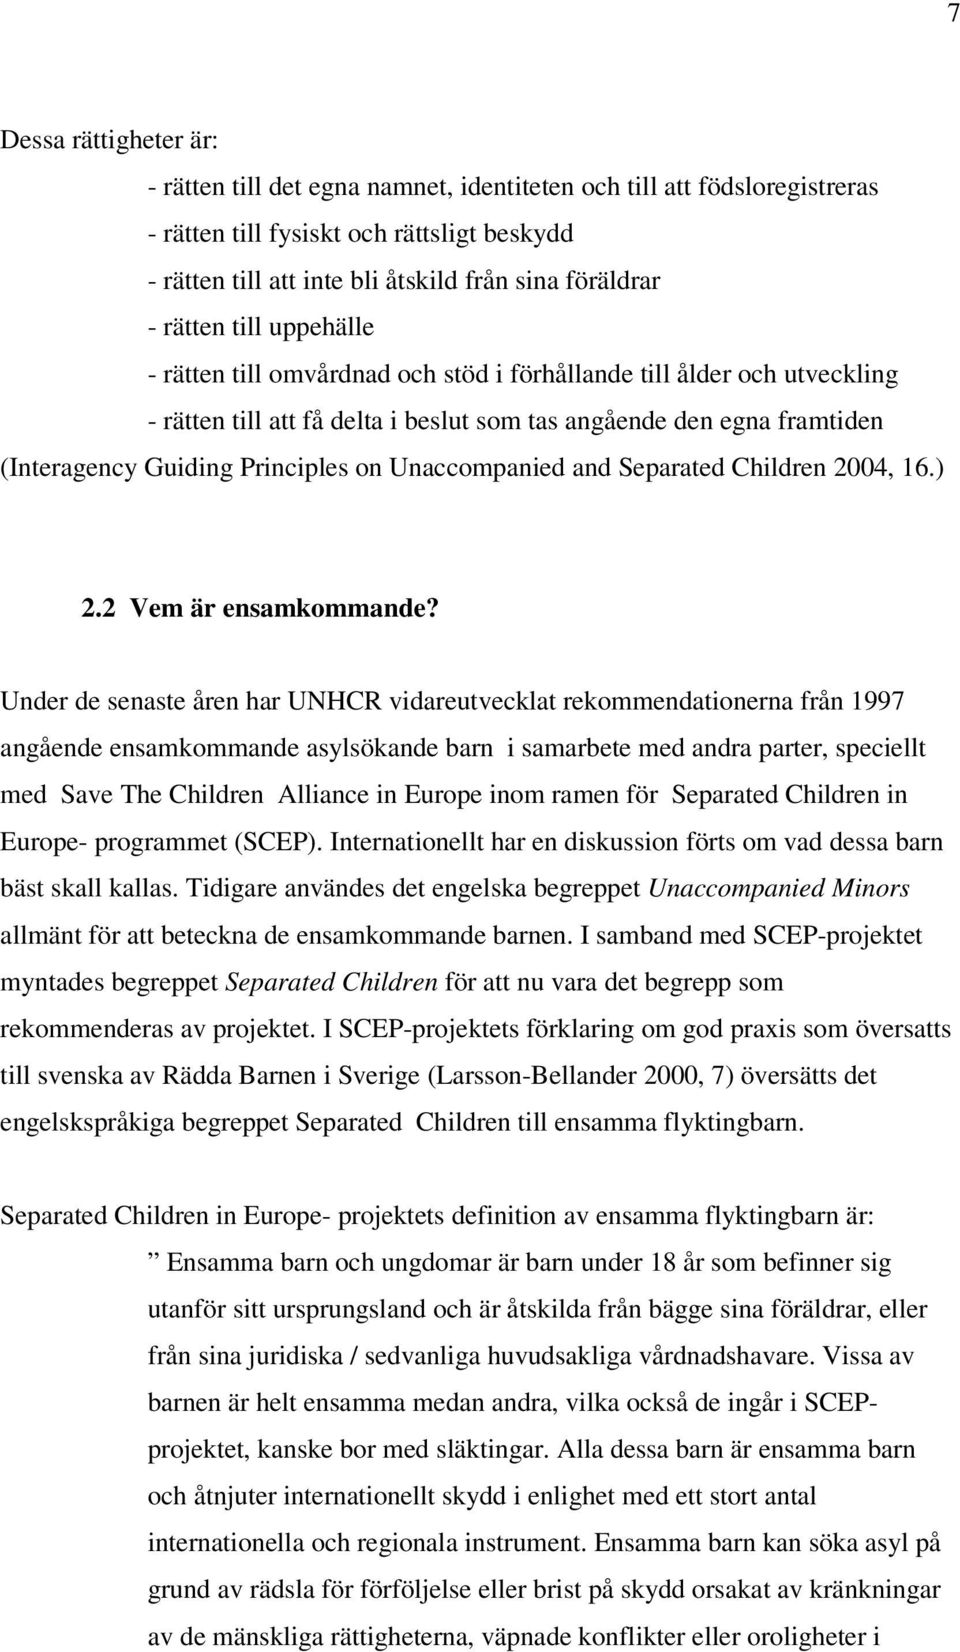 on Unaccompanied and Separated Children 2004, 16.) 2.2 Vem är ensamkommande?